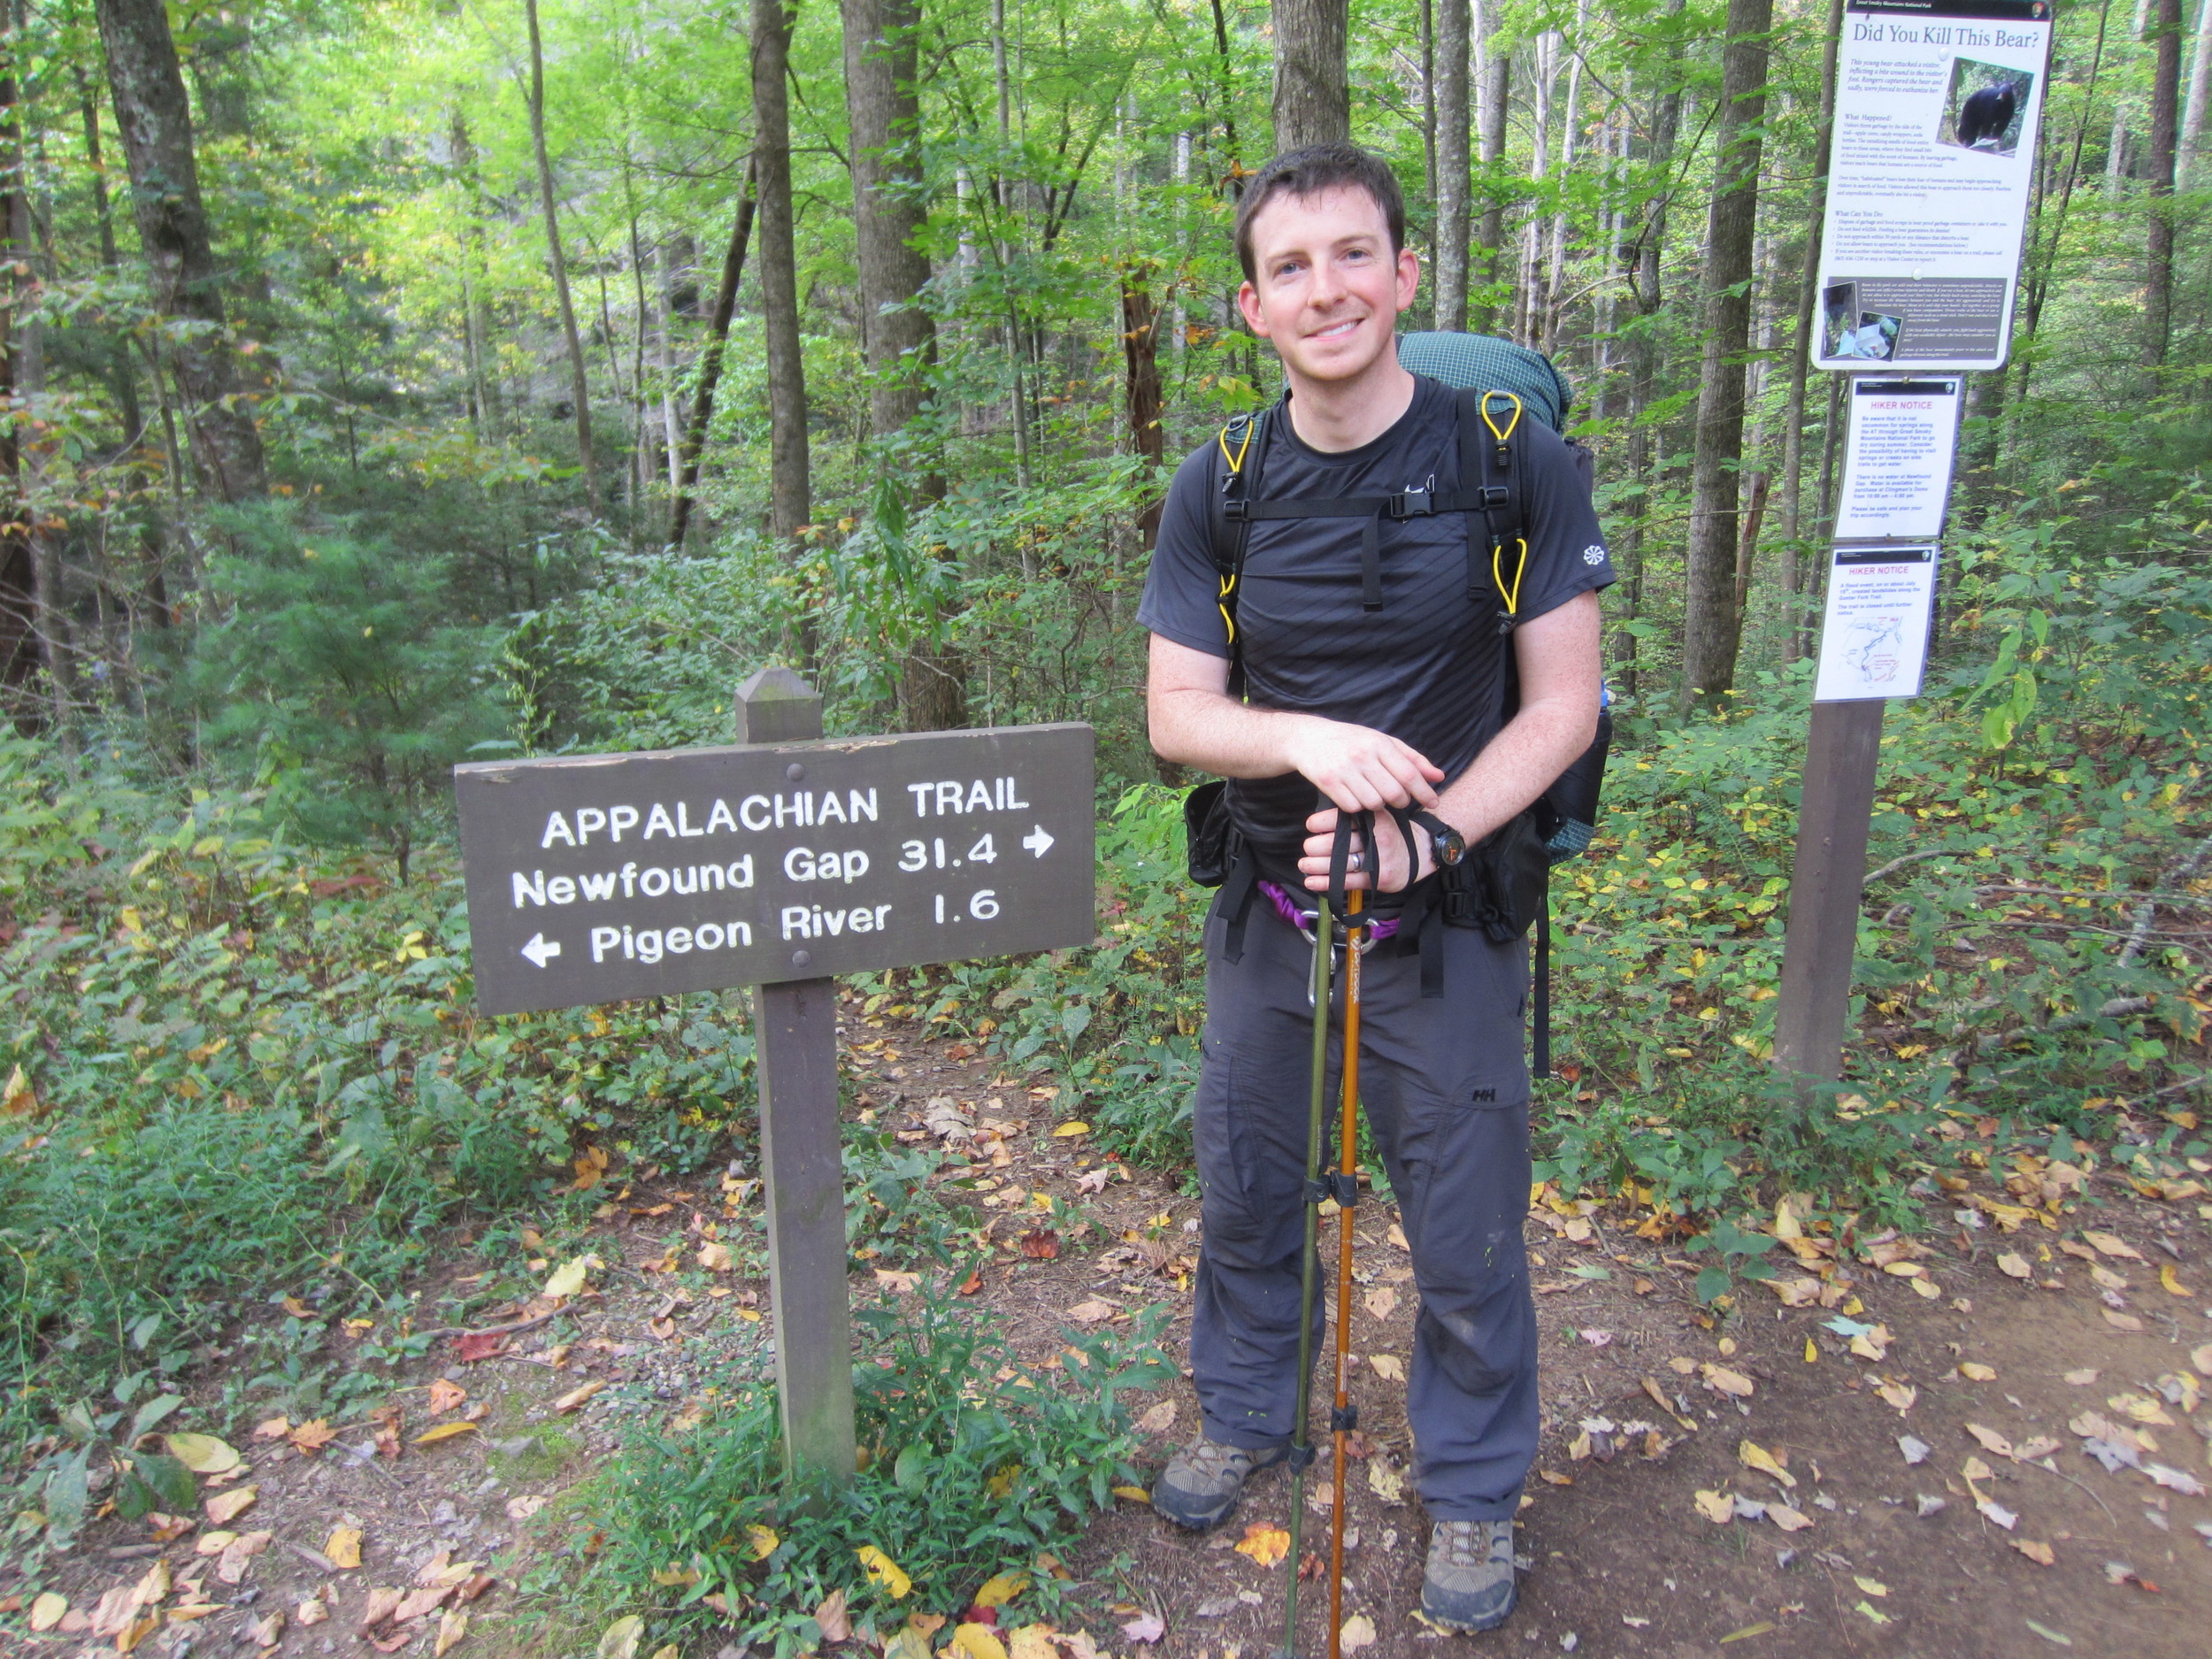 Appalachian Trail - Hot Springs, NC to Davenport Gap, NC